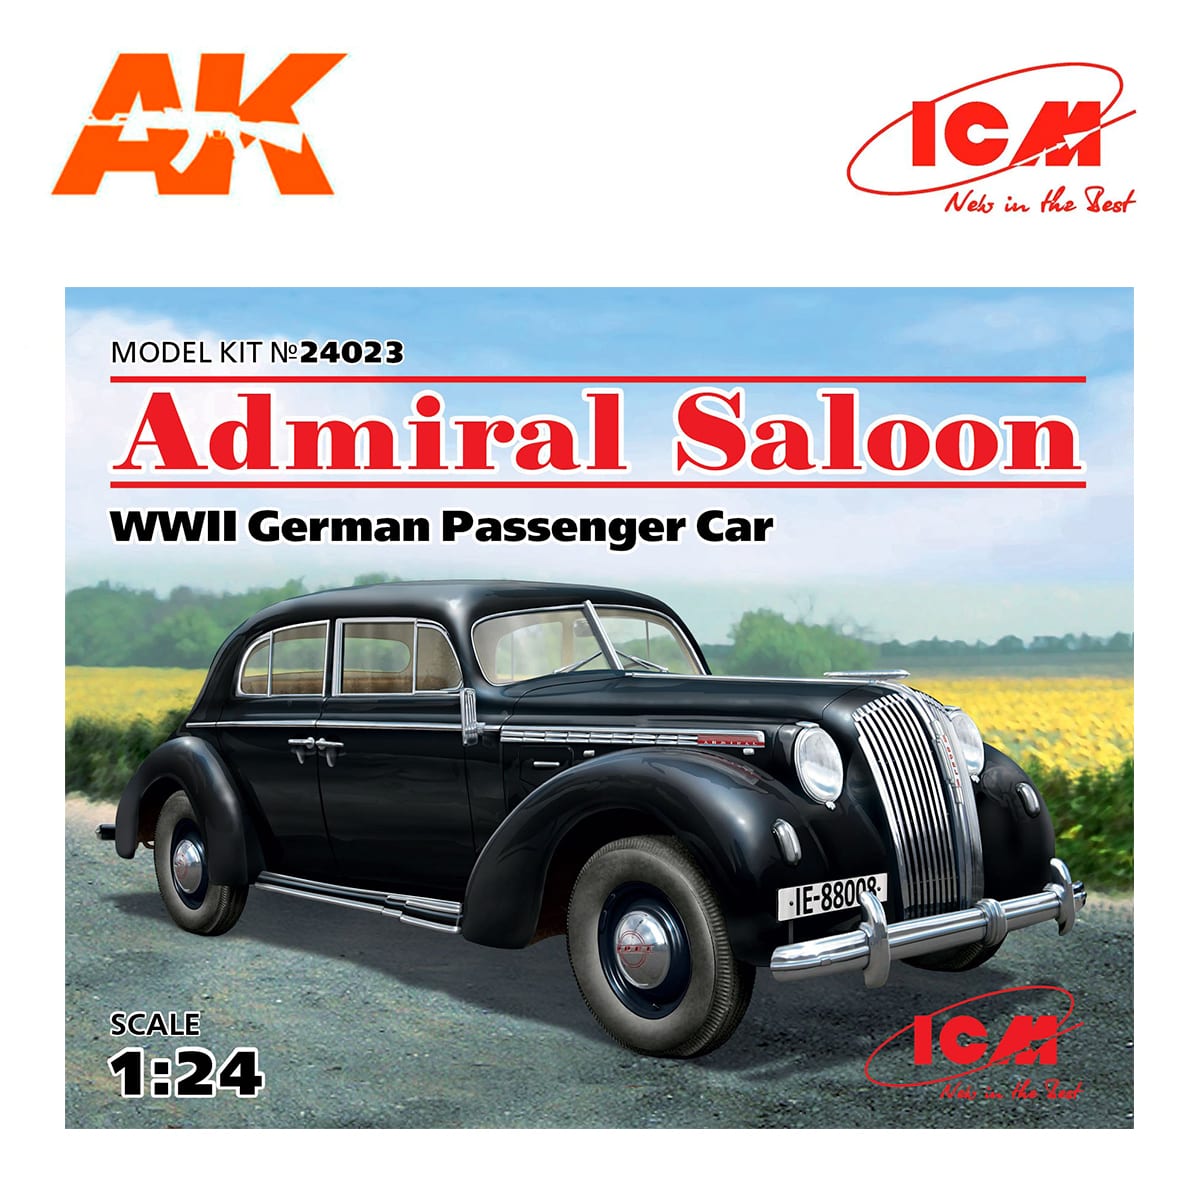 Admiral Saloon, WWII German Passenger Car 1/24